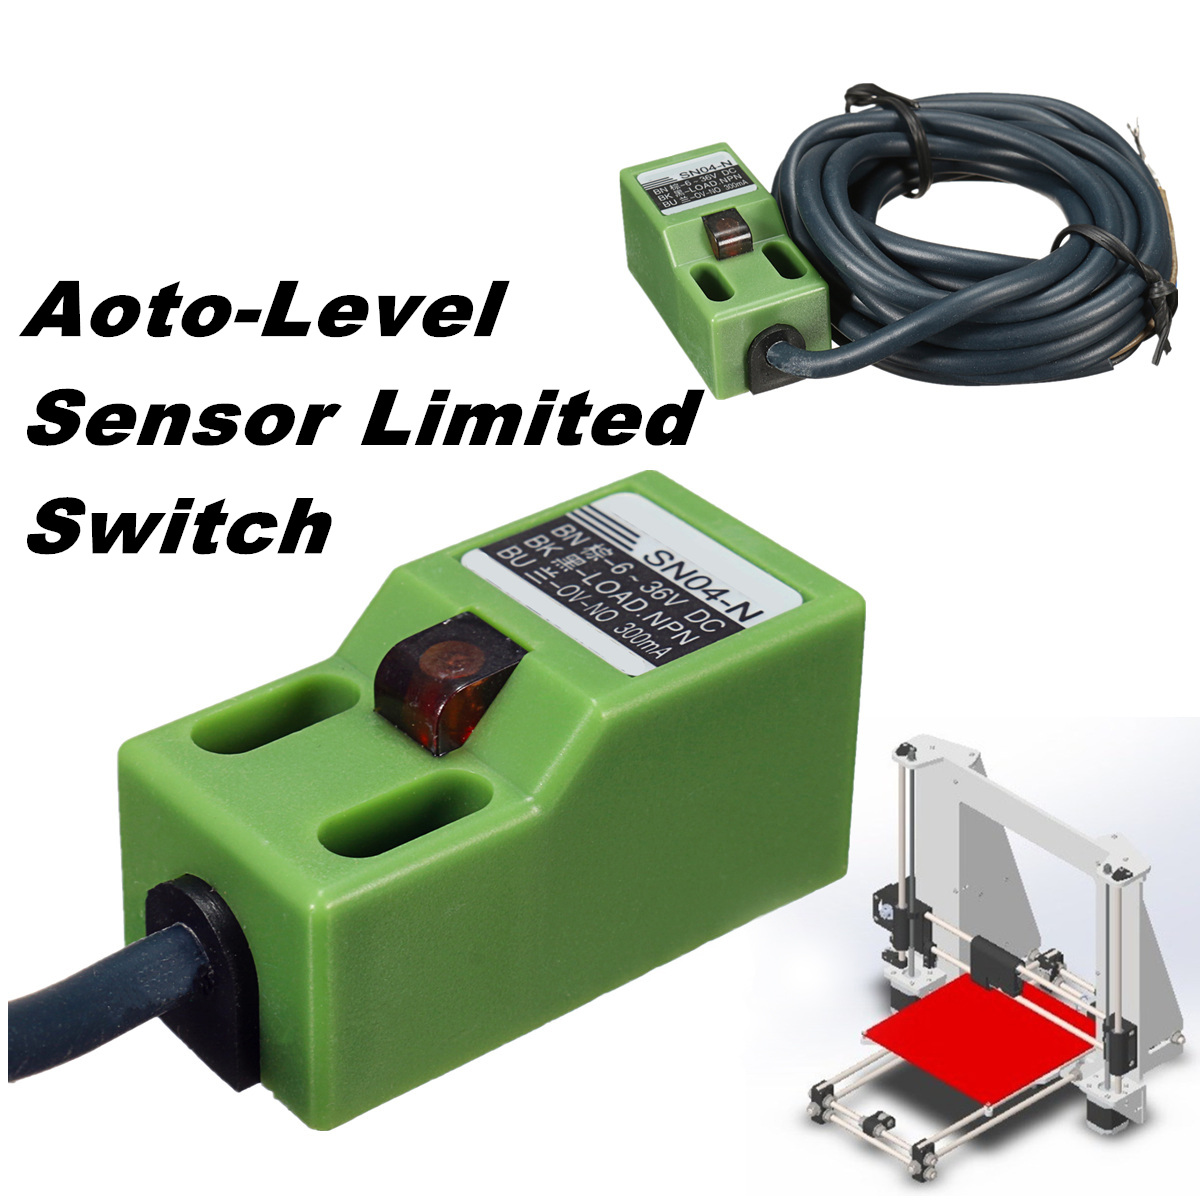 6-36V Auto-Level Sensor Limited Waterproof Switch For Prusa I3 3D Printer 15